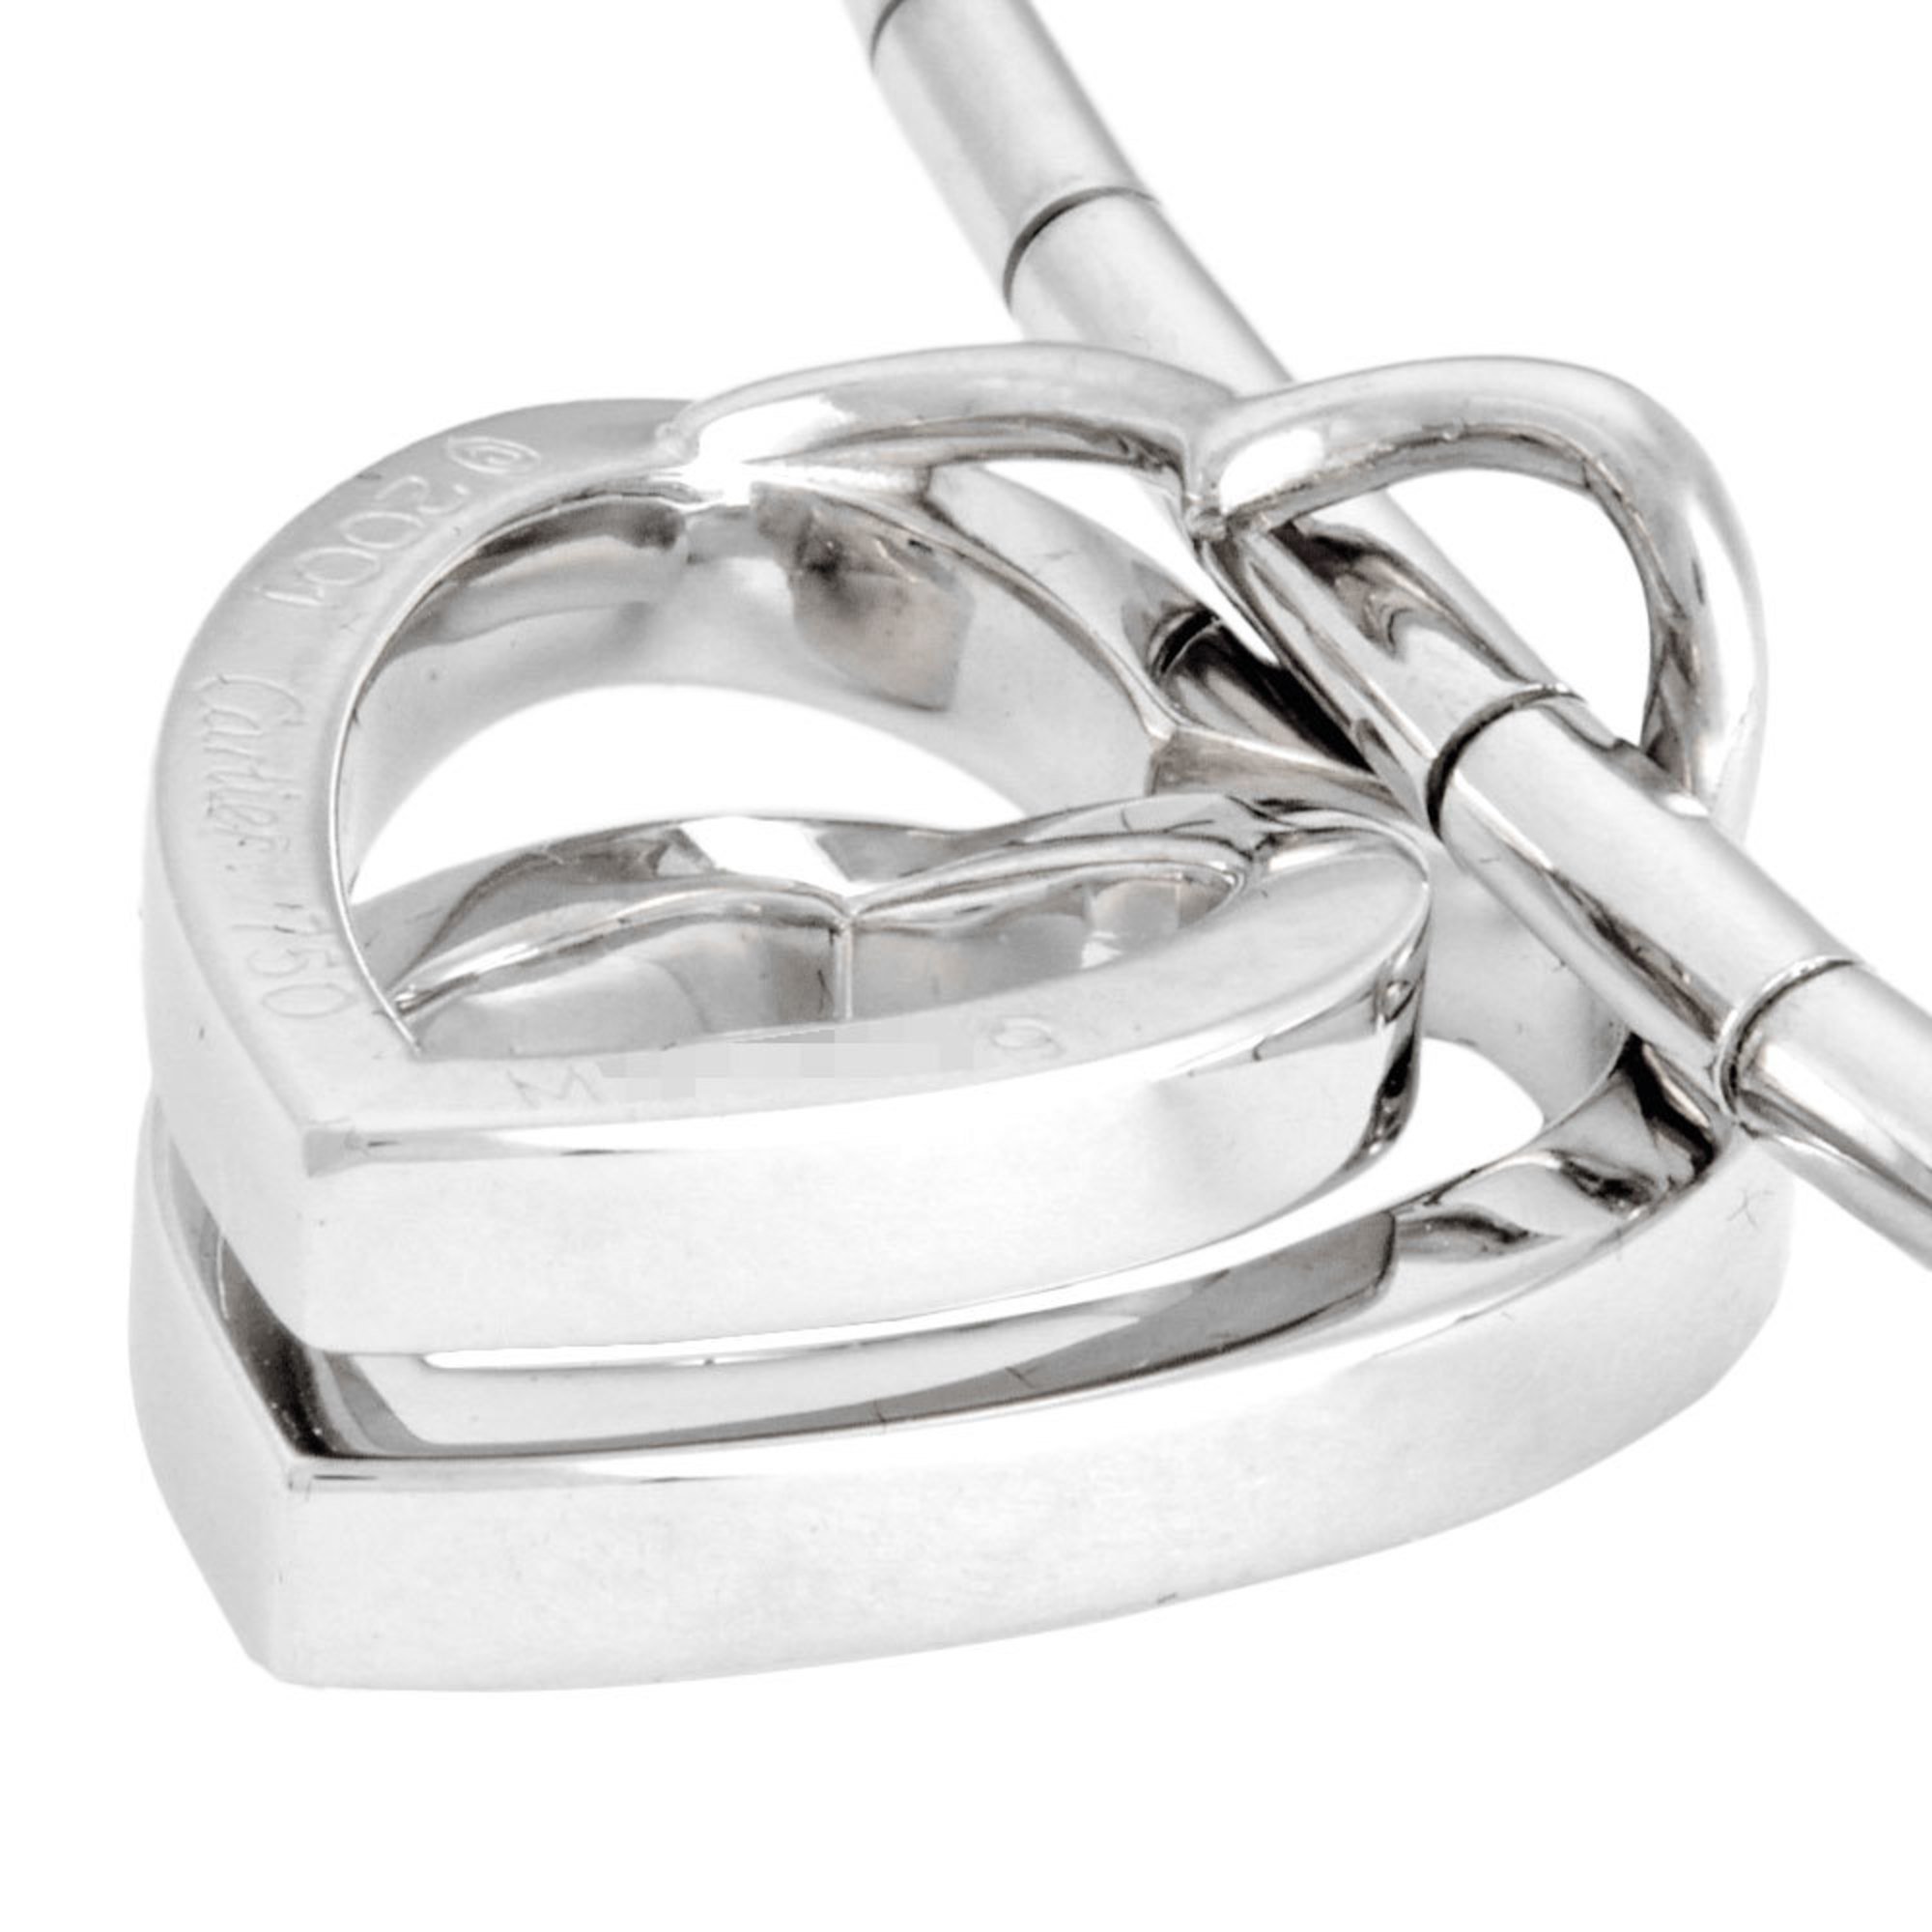 Cartier Interlace Heart Choker Diamond K18WG Omega Tube Necklace 36cm Women's